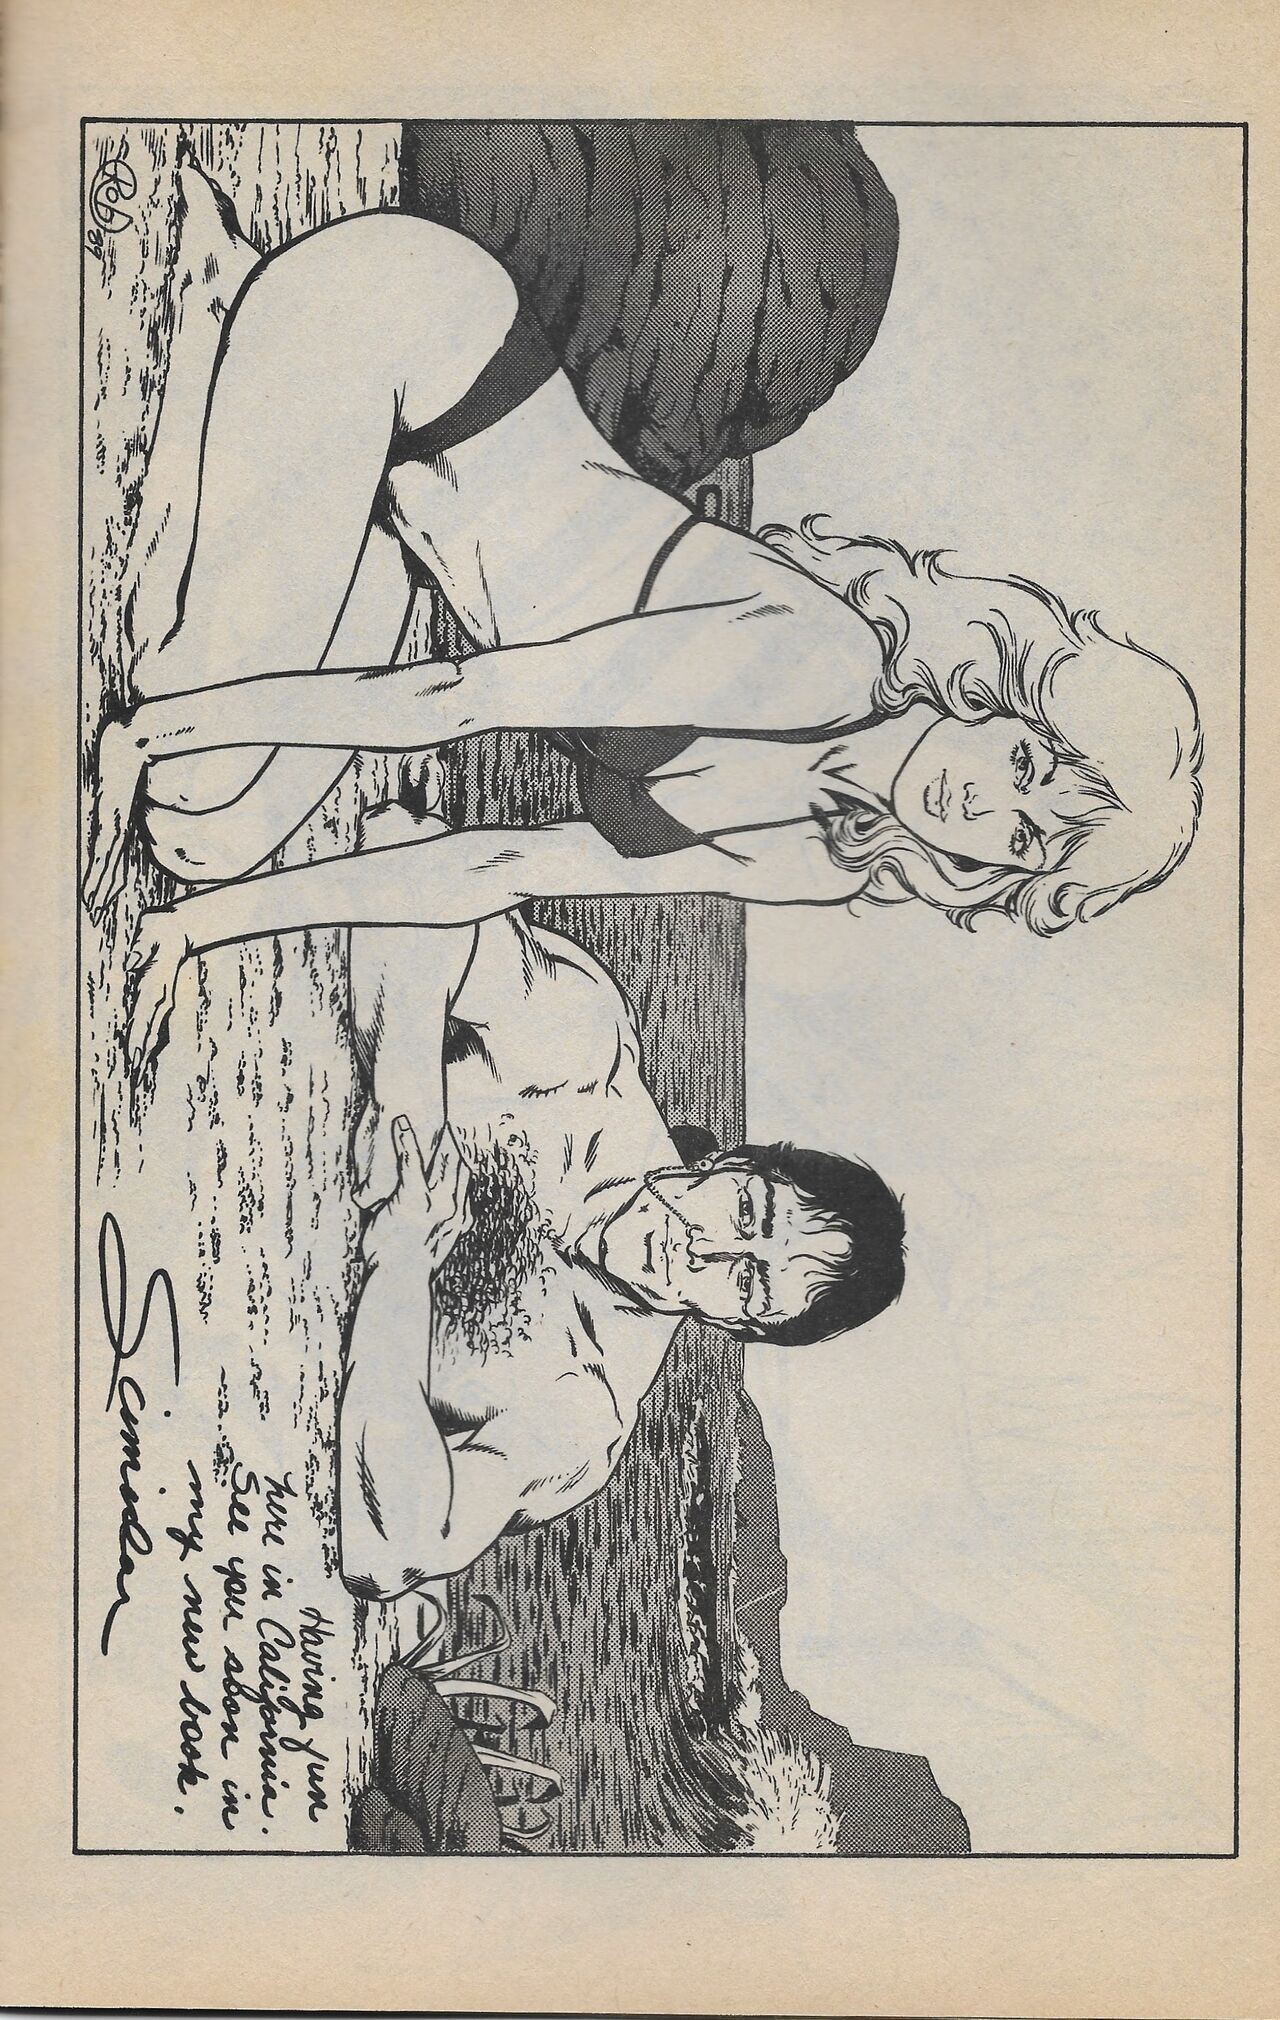 Beach Party (Eternity Comics, 1989) 4